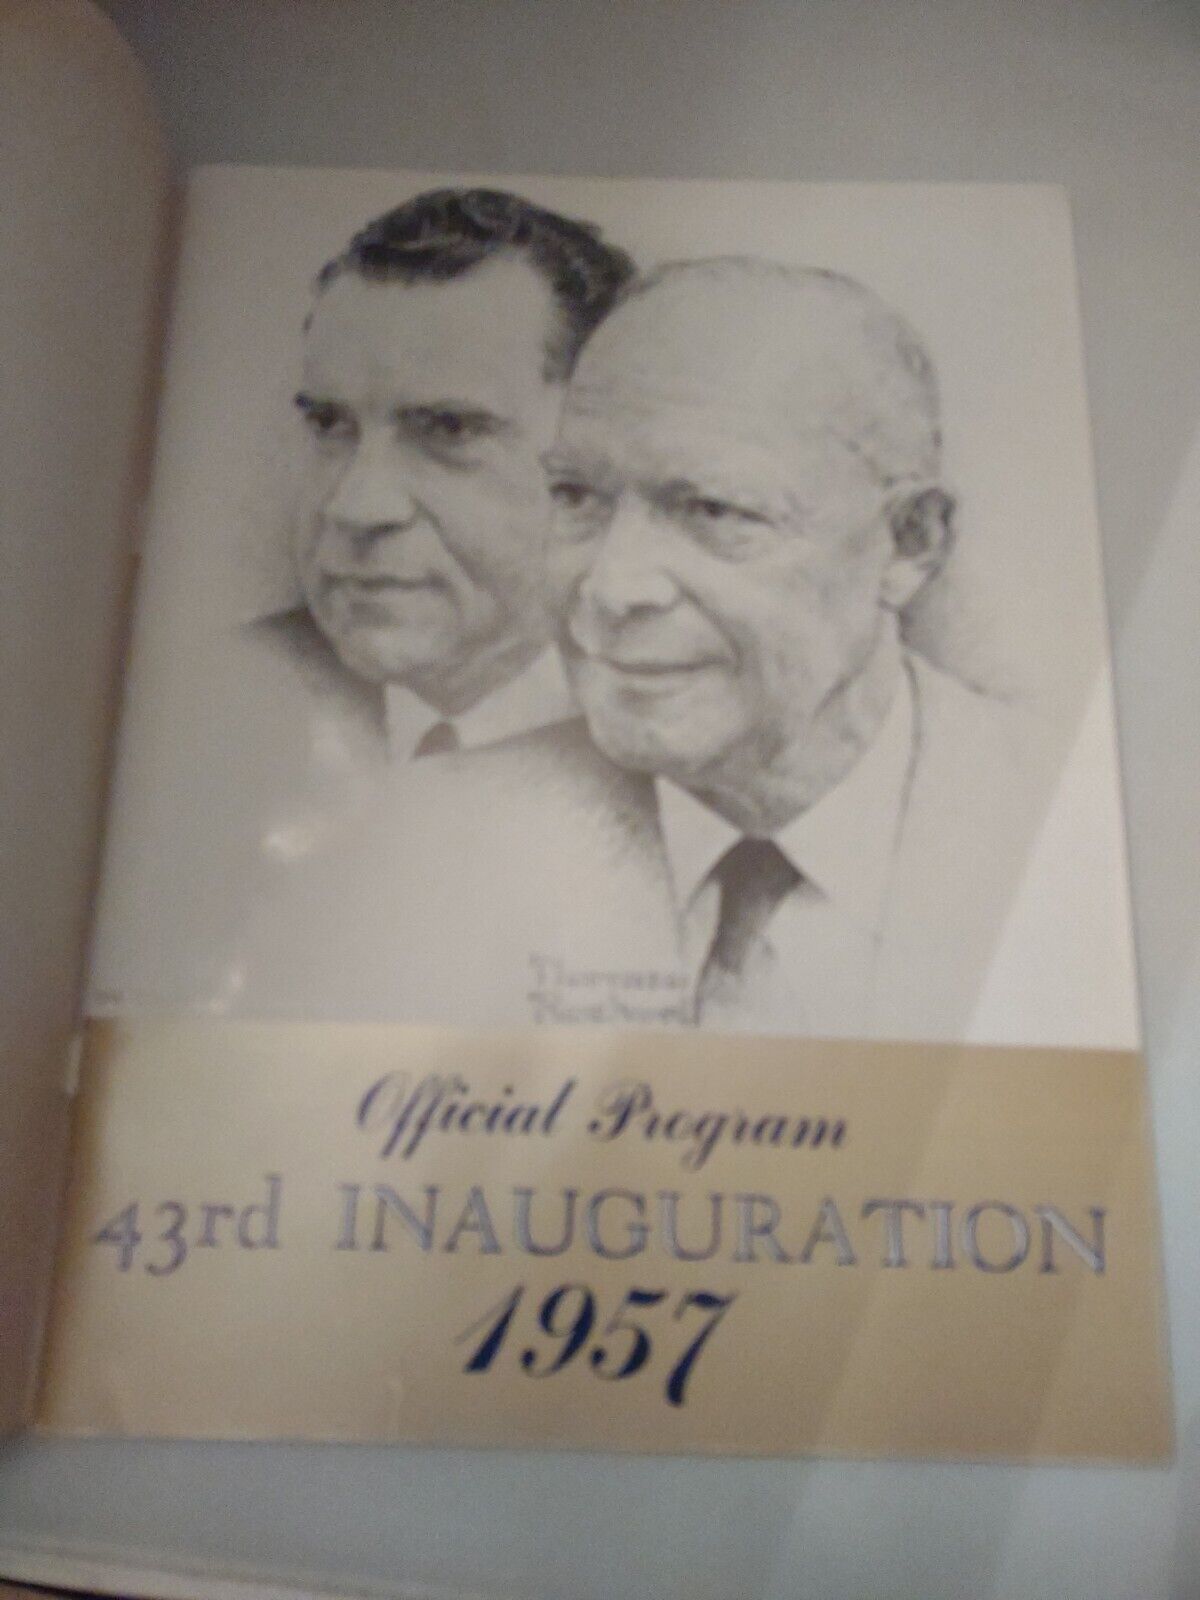 Official Program 43rd Inauguration 1957 Dwight Eisenhower Richard Nixon Cover...